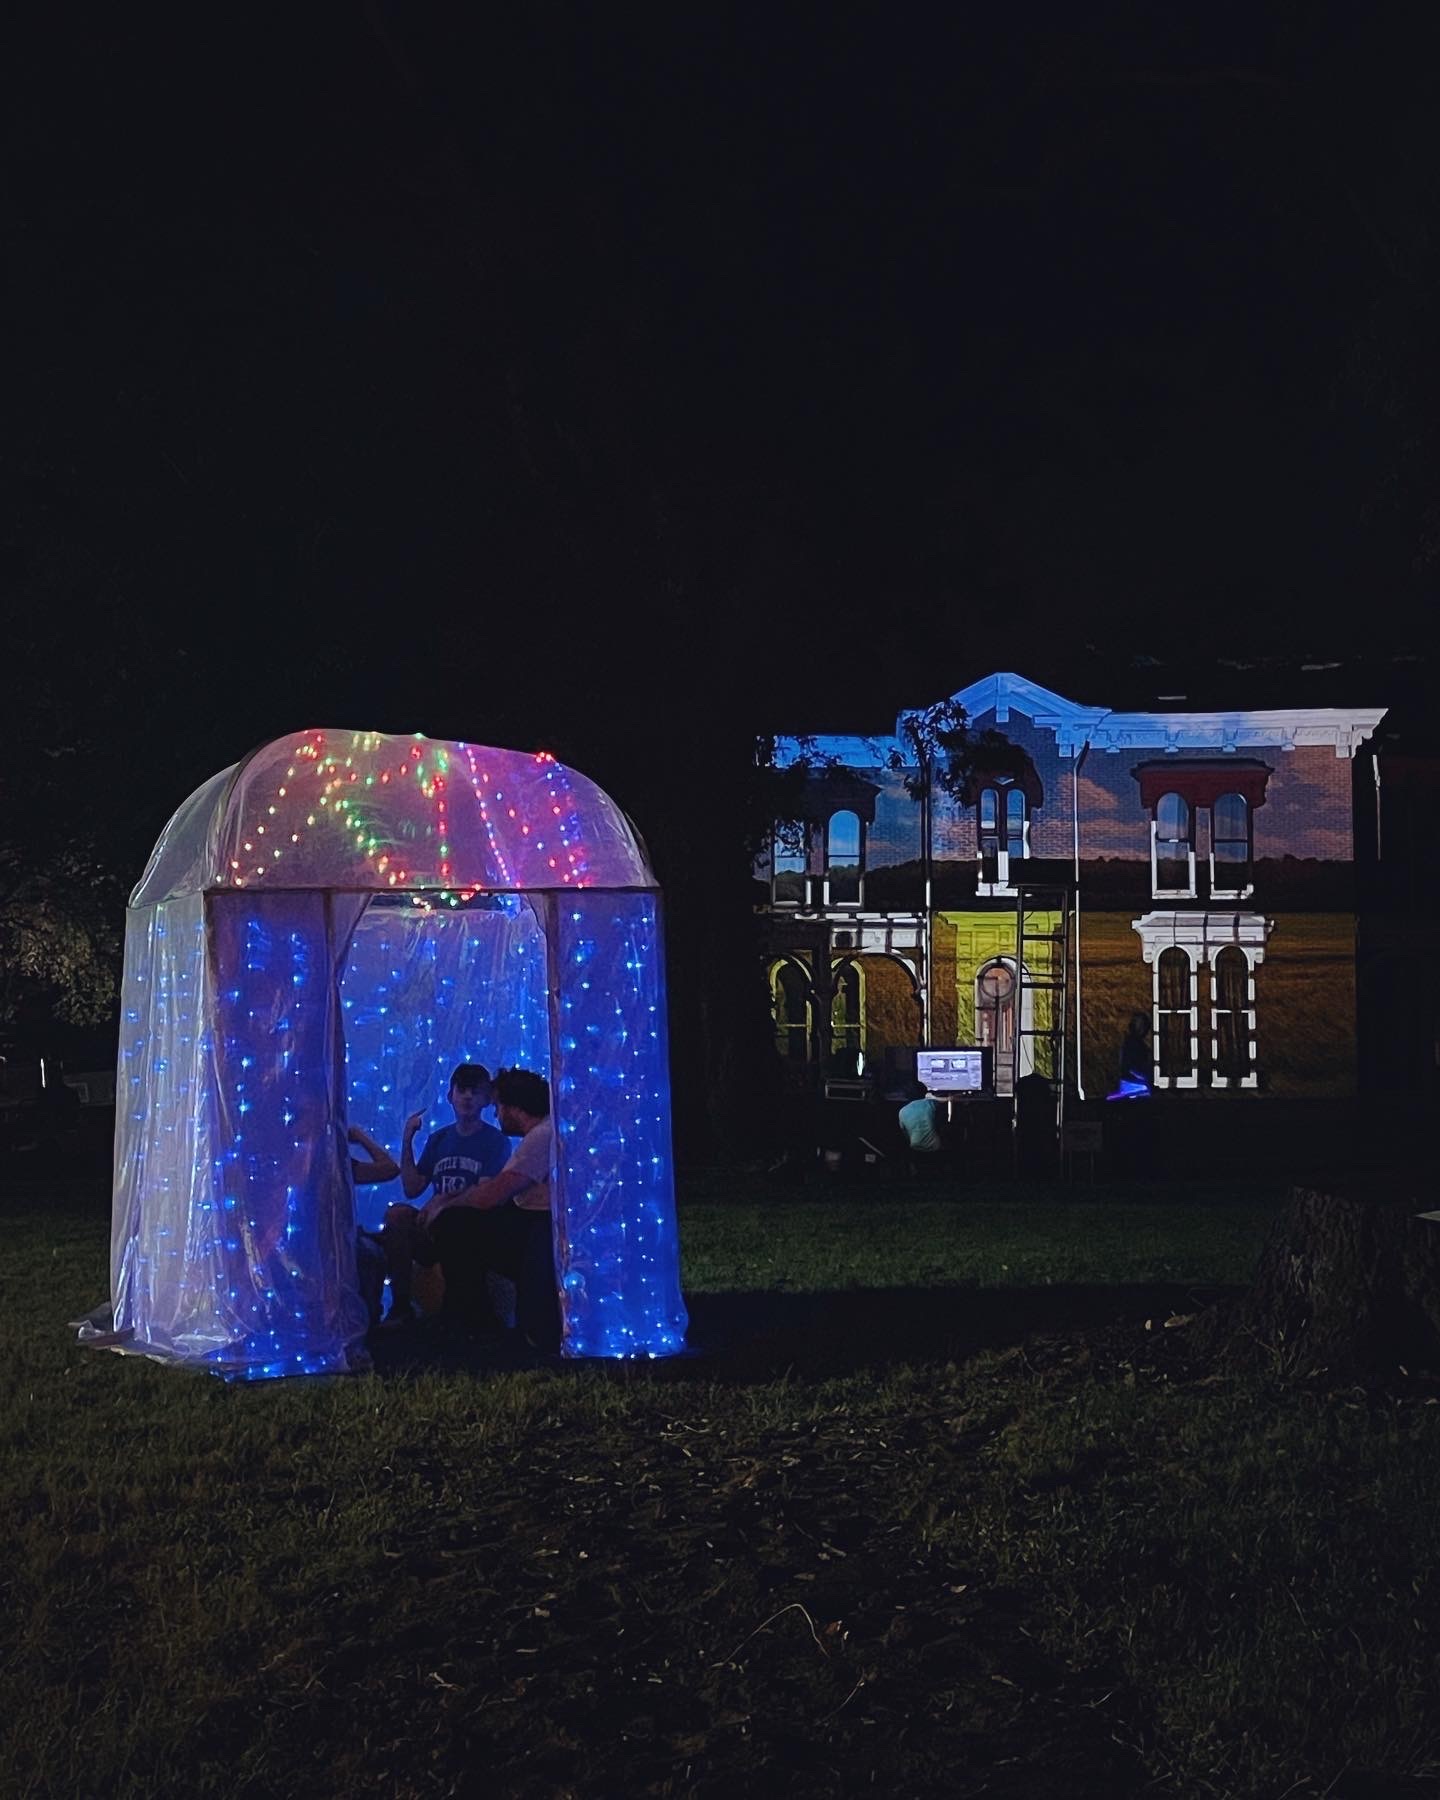 Beth Reitmeyer, Elemental, 2022 - 2023, painted plastics, iridescent films, LED lights, 5” diameter each, Artville, Nashville, TN, created at ChaNorth and the Golden Foundation, with support from Artville